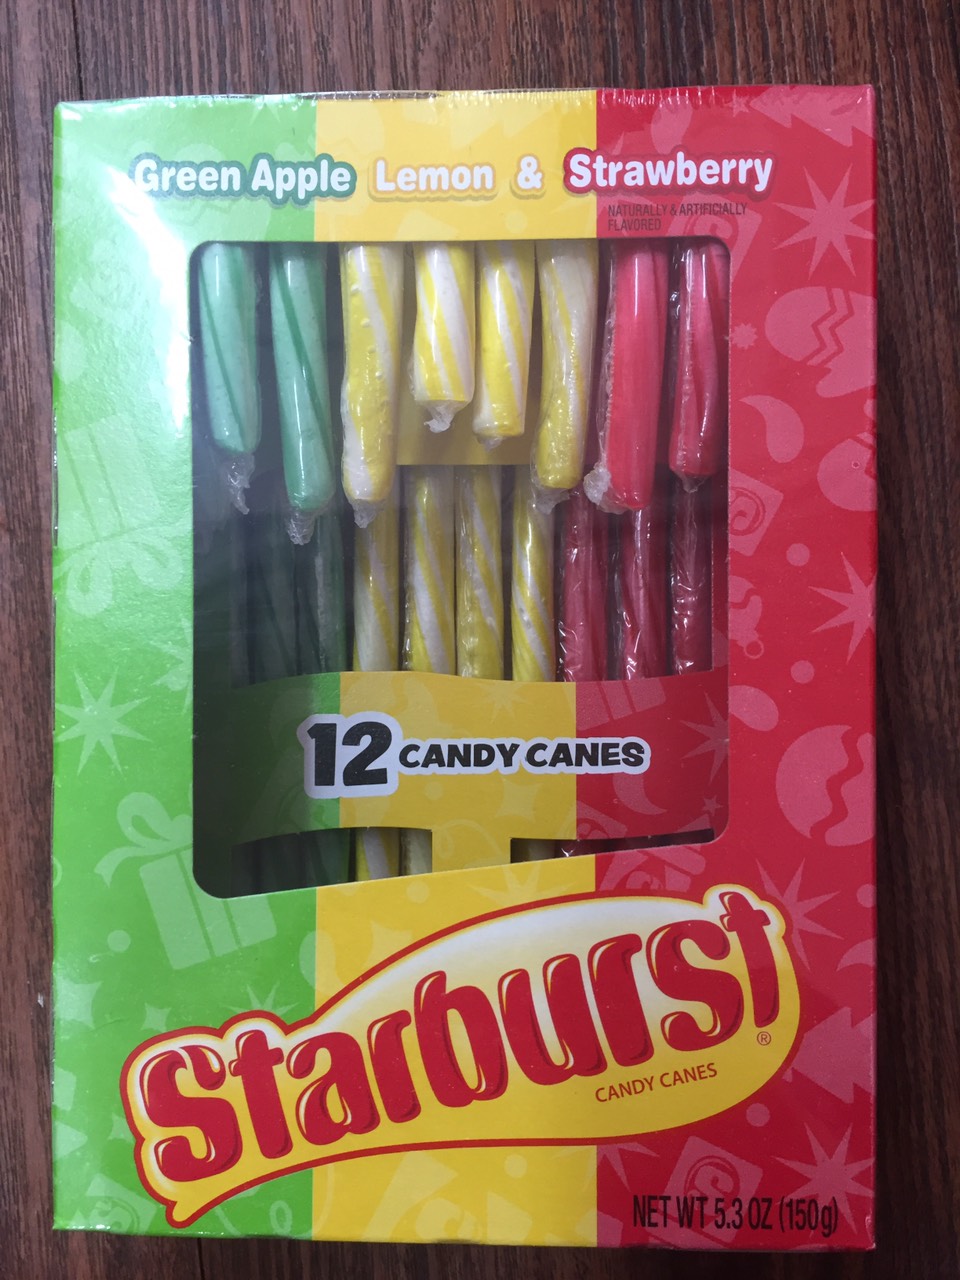 Starburst Candy cane